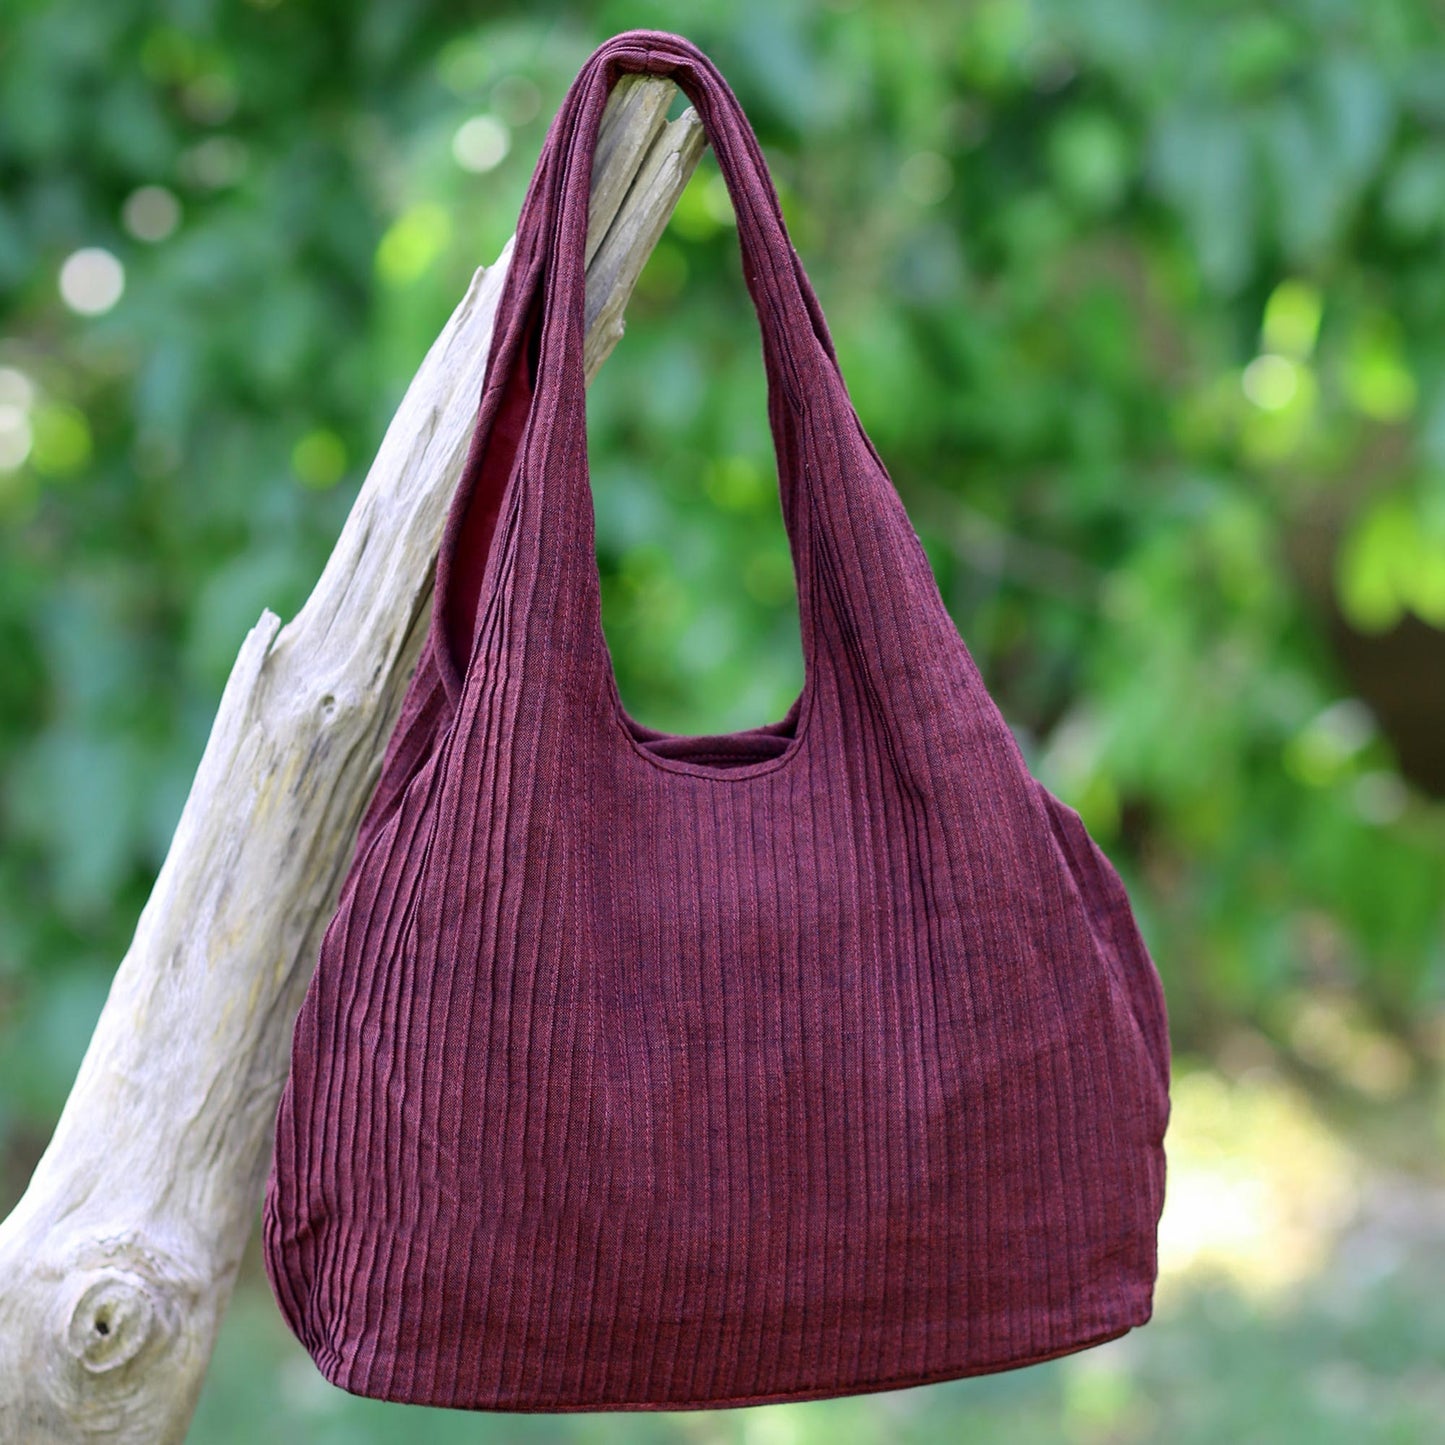 Thai Texture in Wine 100% Cotton Textured Shoulder Bag in Wine from Thailand